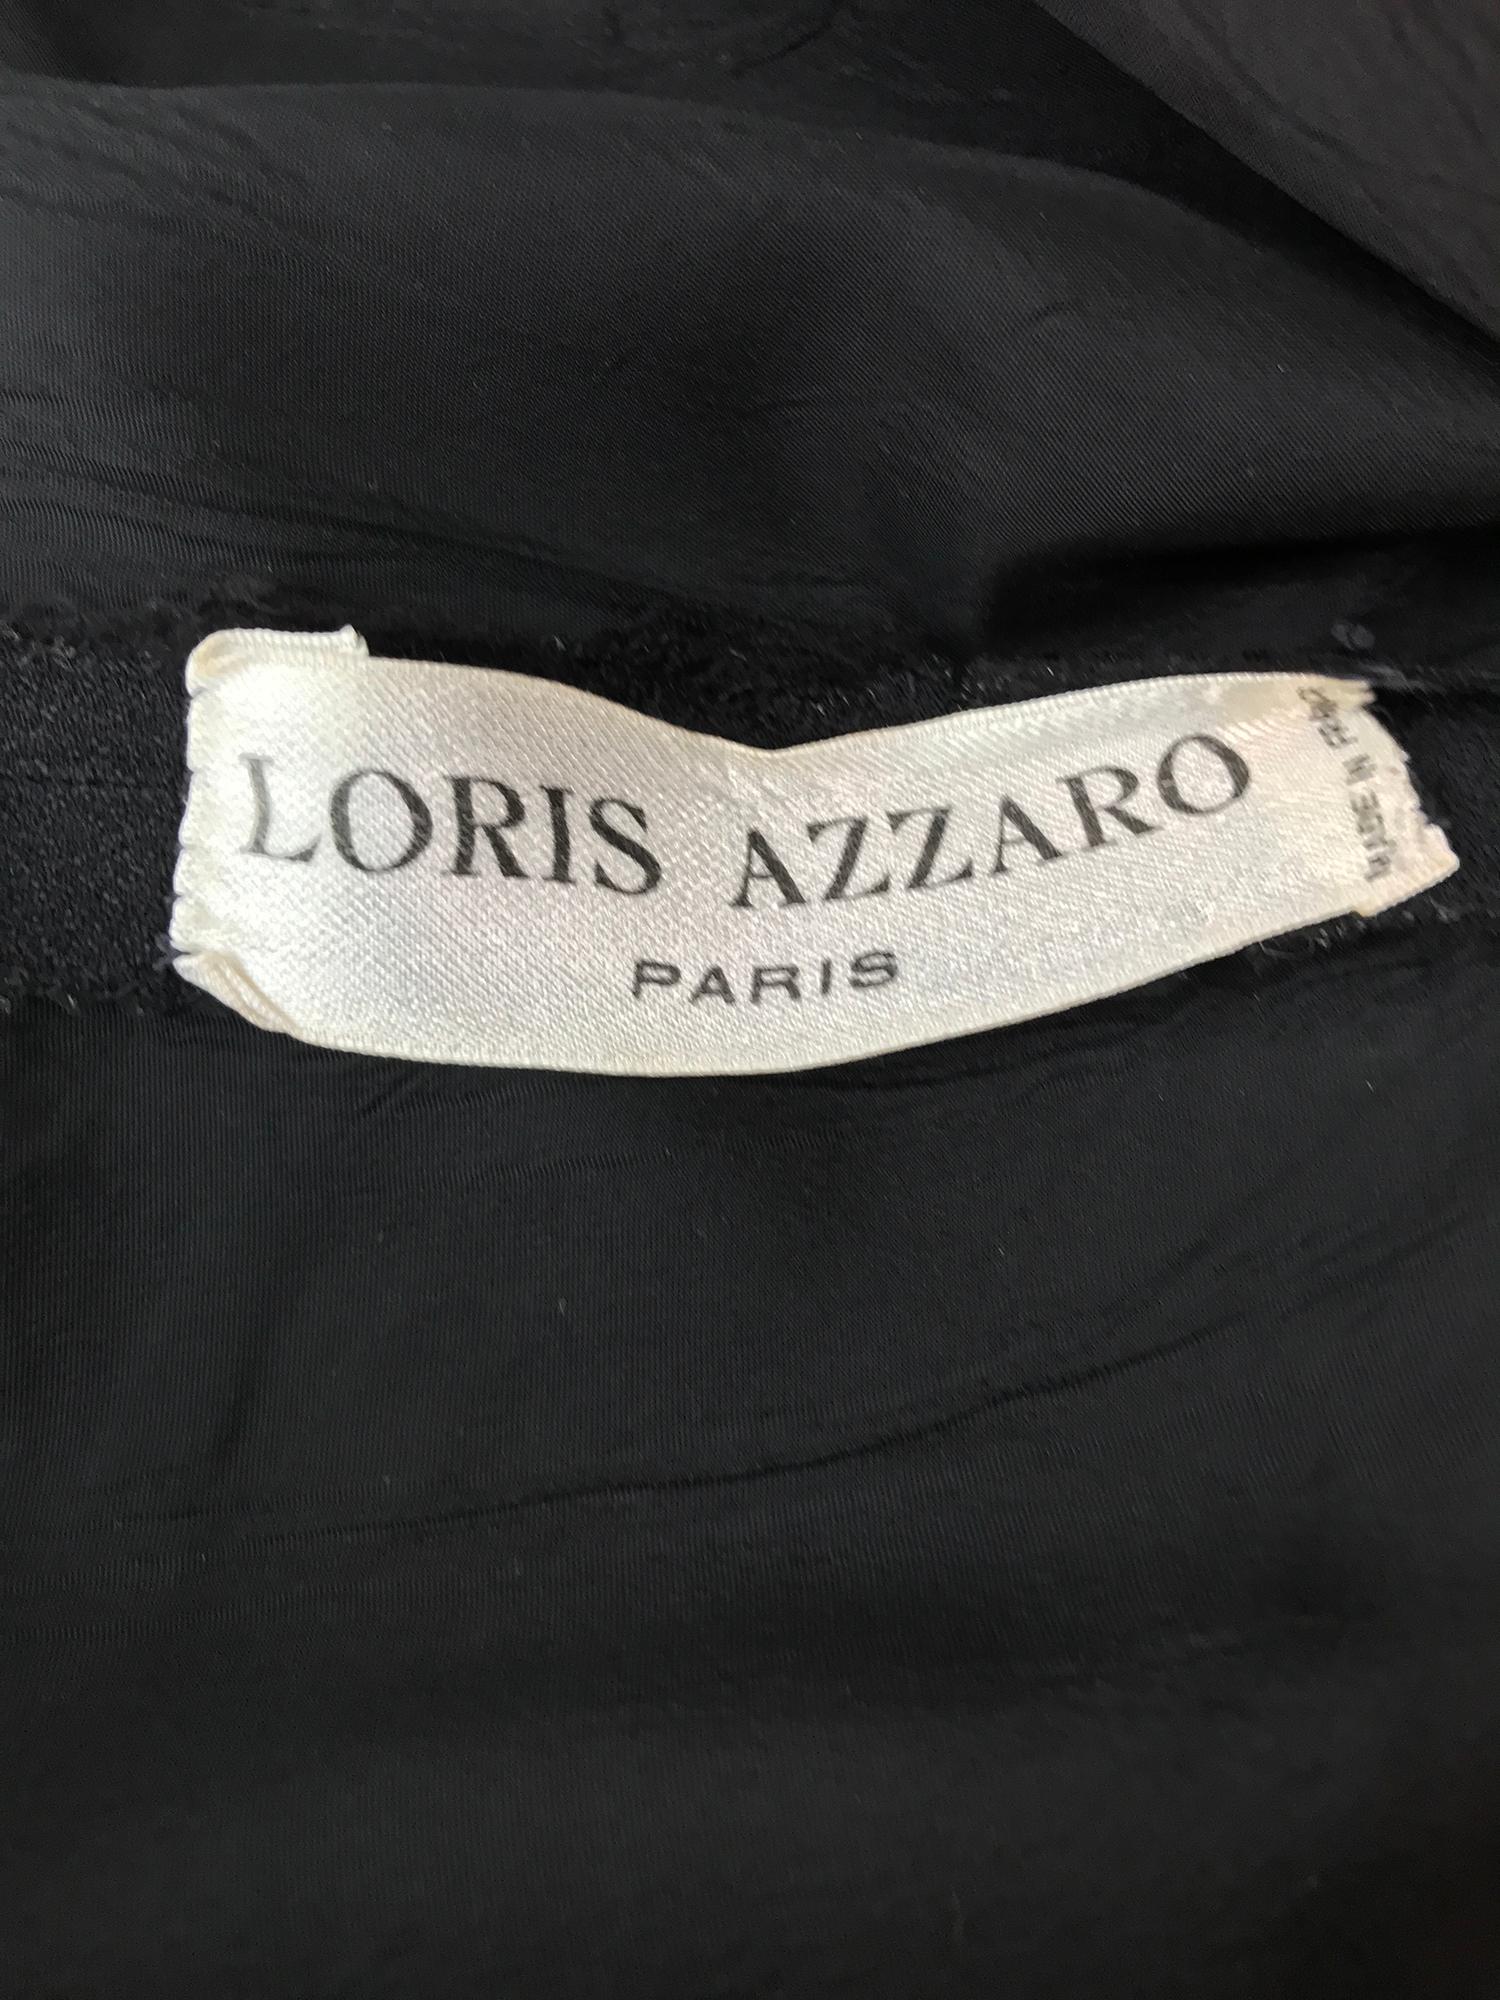 Loris Azzaro Couture Gold Chain Fringe Collar Black Maxi Dress 1970s 6